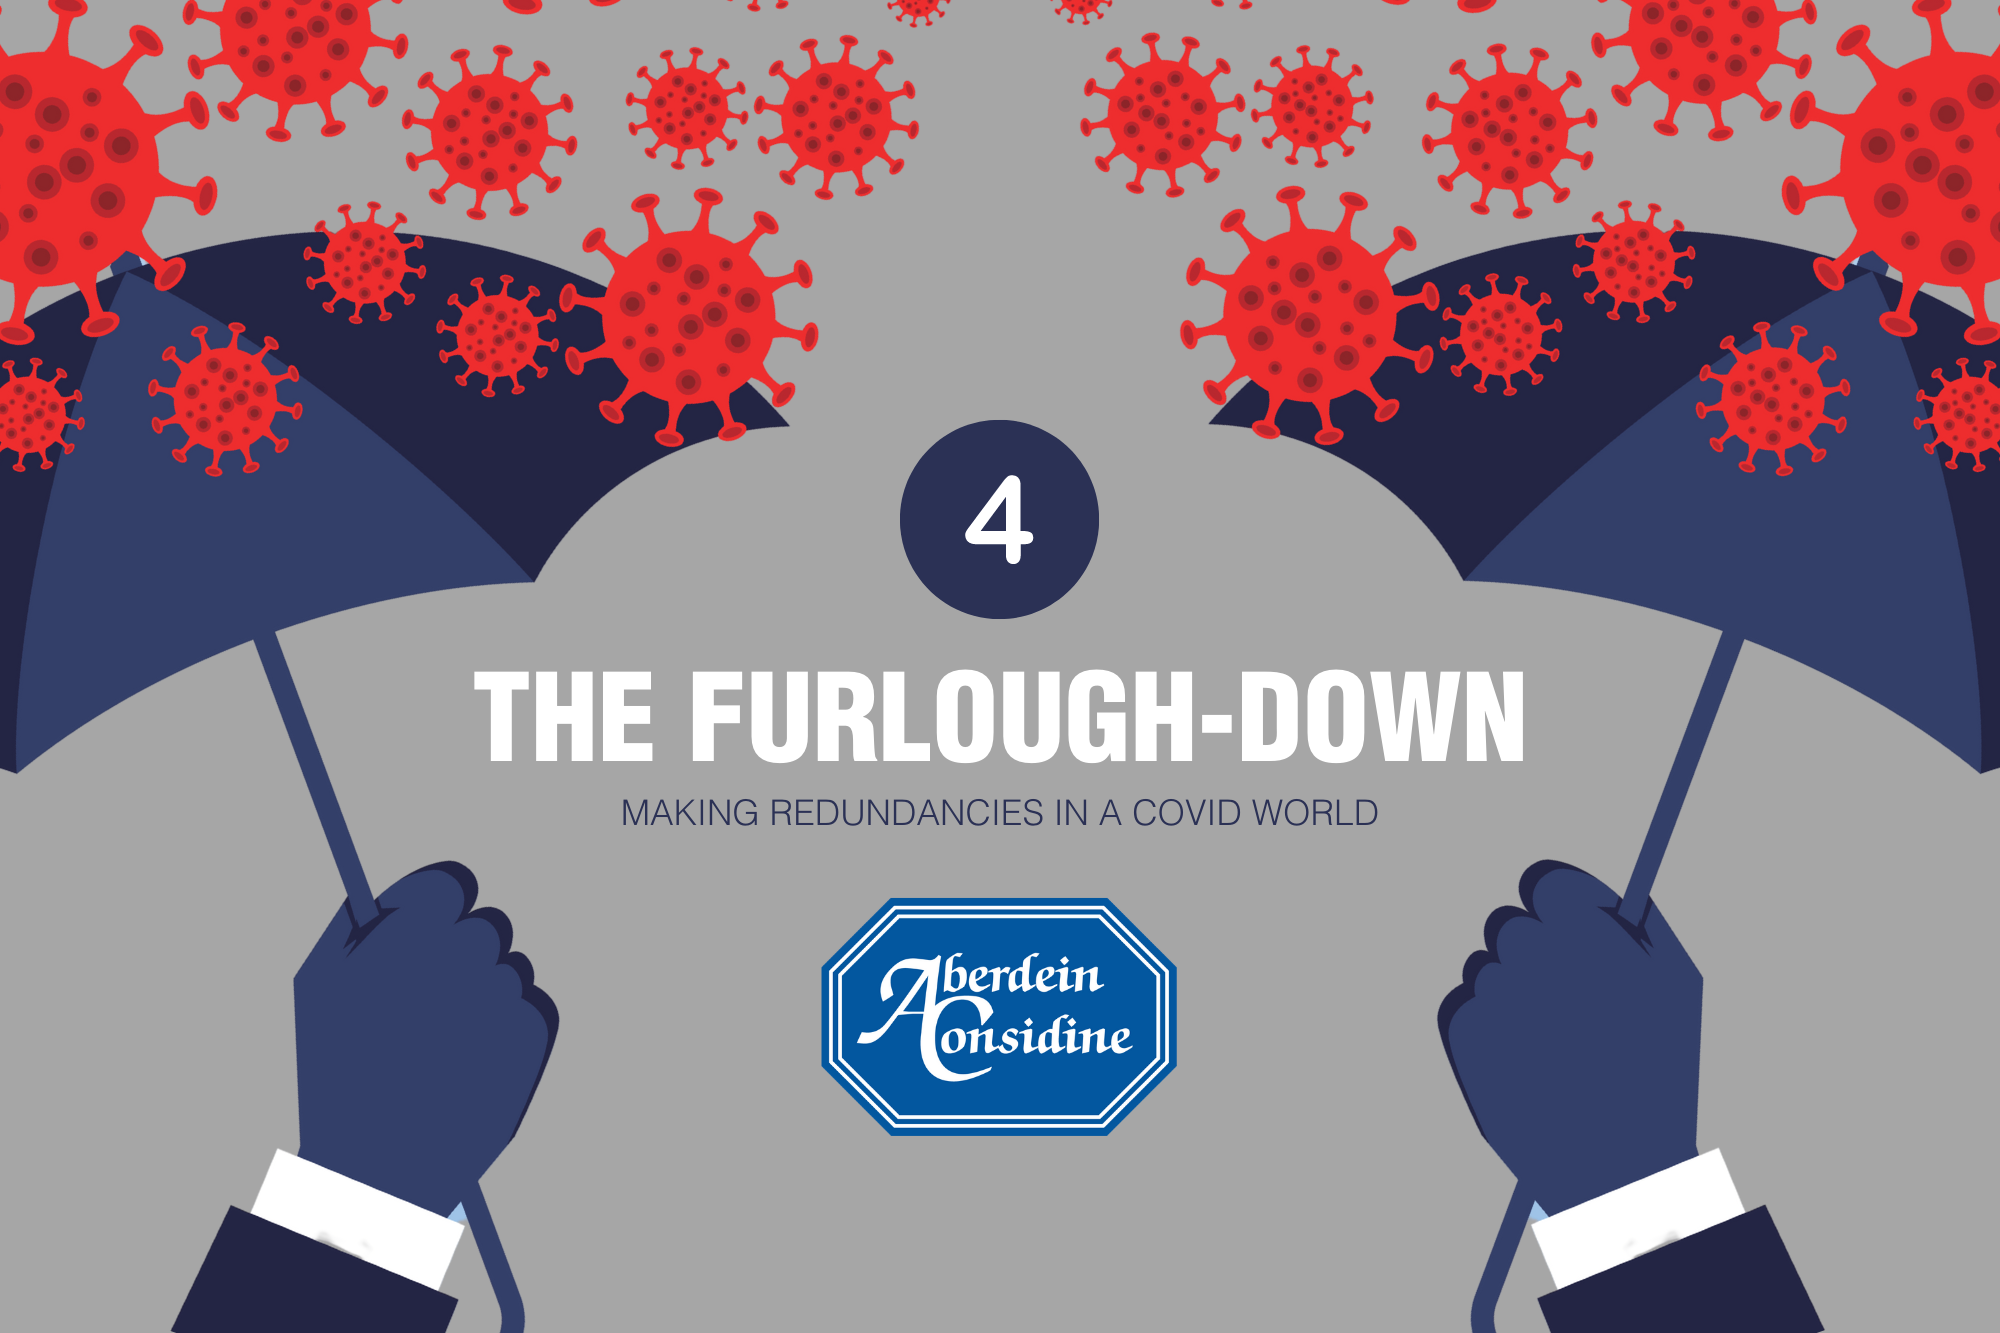 The Furlough-down: Making redundancies after Covid-19